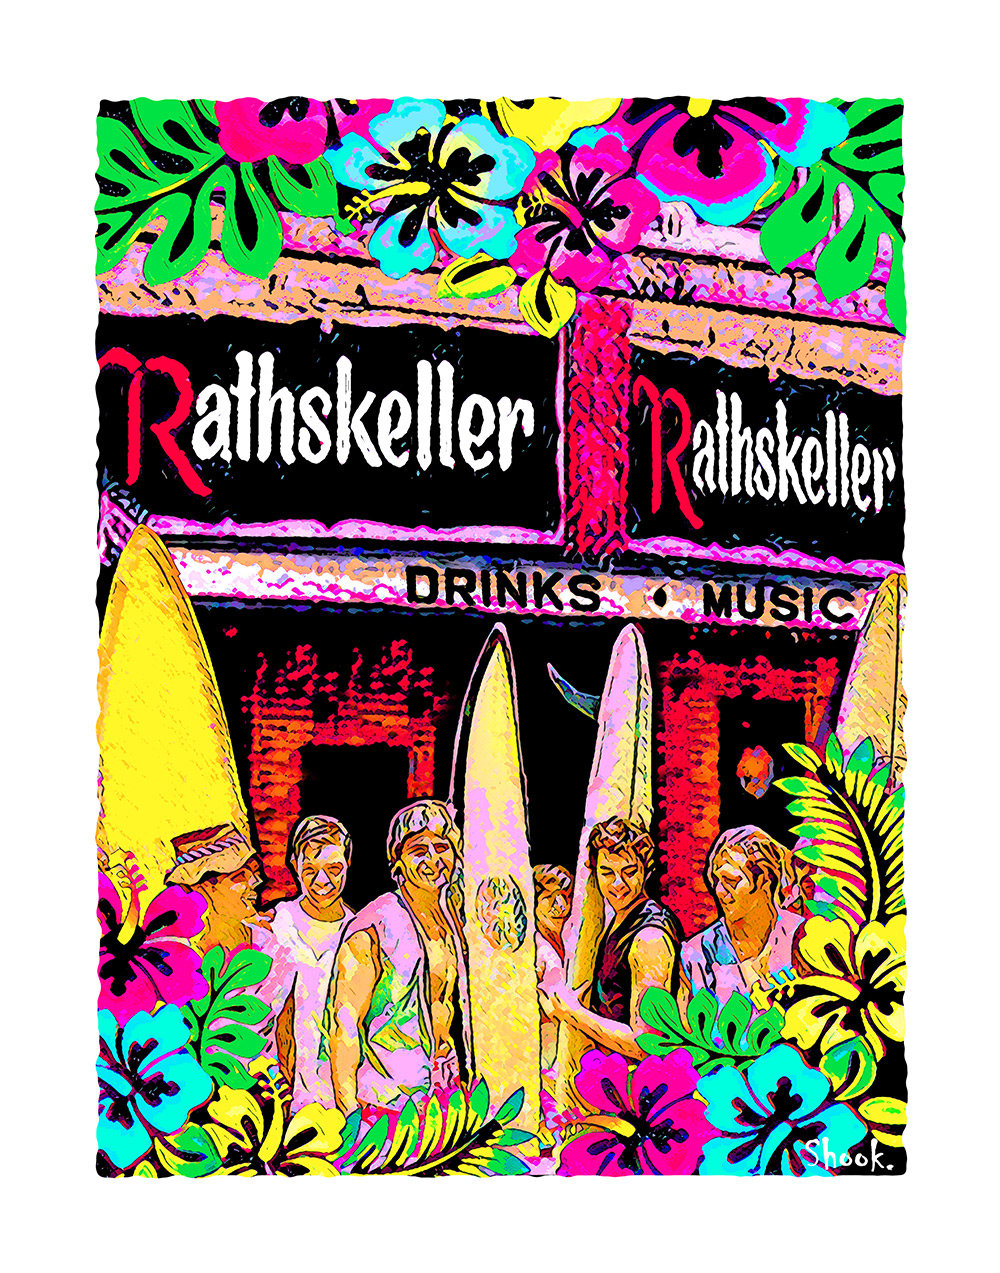 The Rathskeller "Surf's Up" Giclée Art Print (Multi-size options)